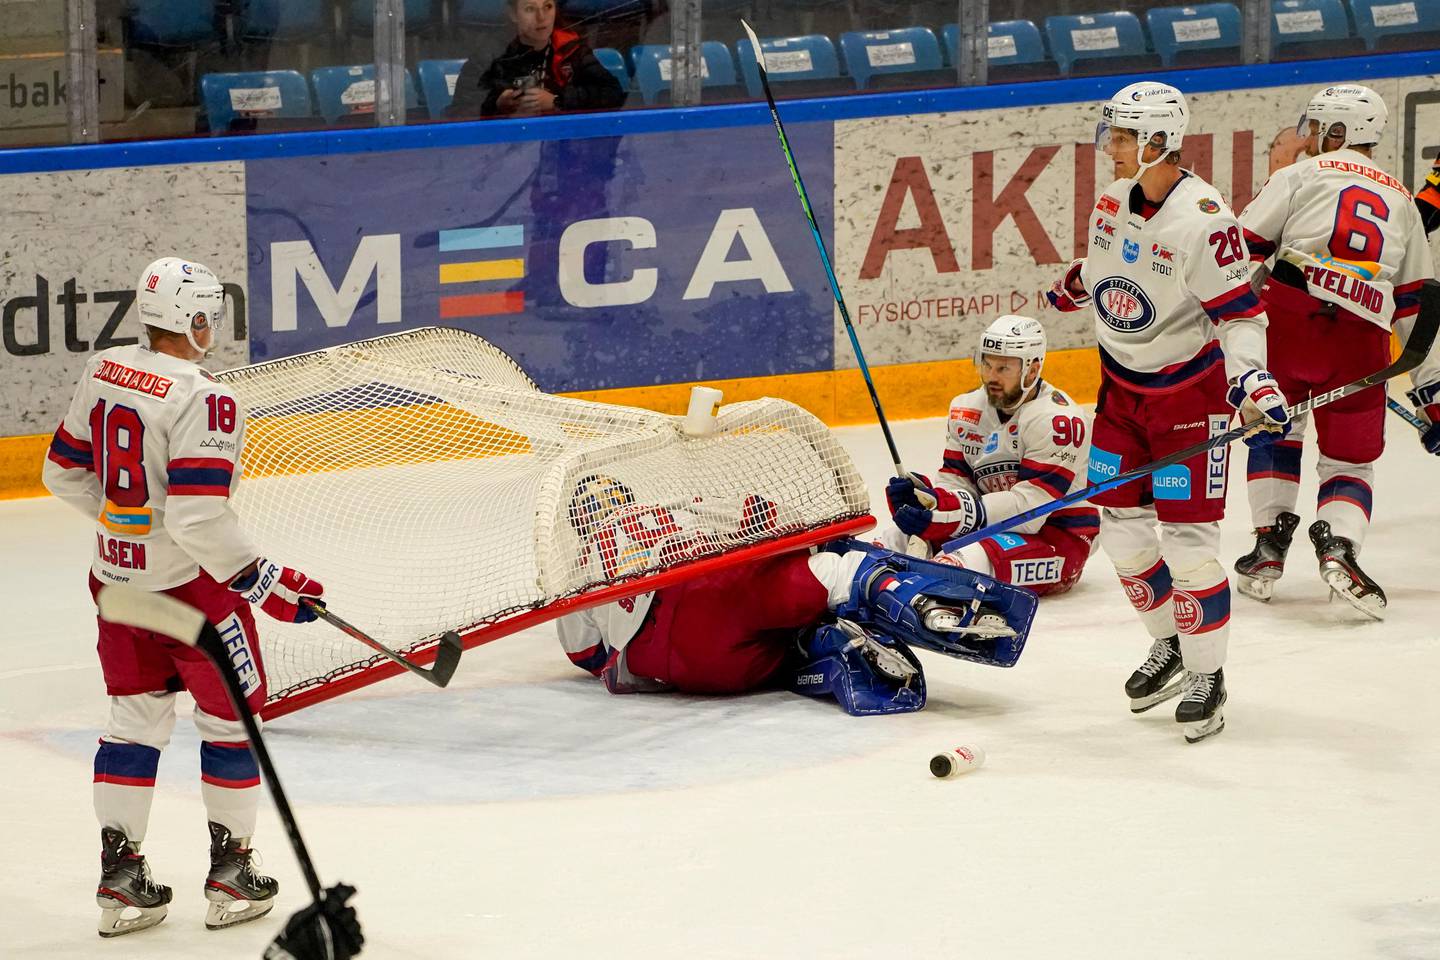 Asker 20201008. 
Målet velter under ishockeykampen mellom Frisk-Asker og Vålerenga torsdag kveld.
Foto: Lise Åserud / NTB